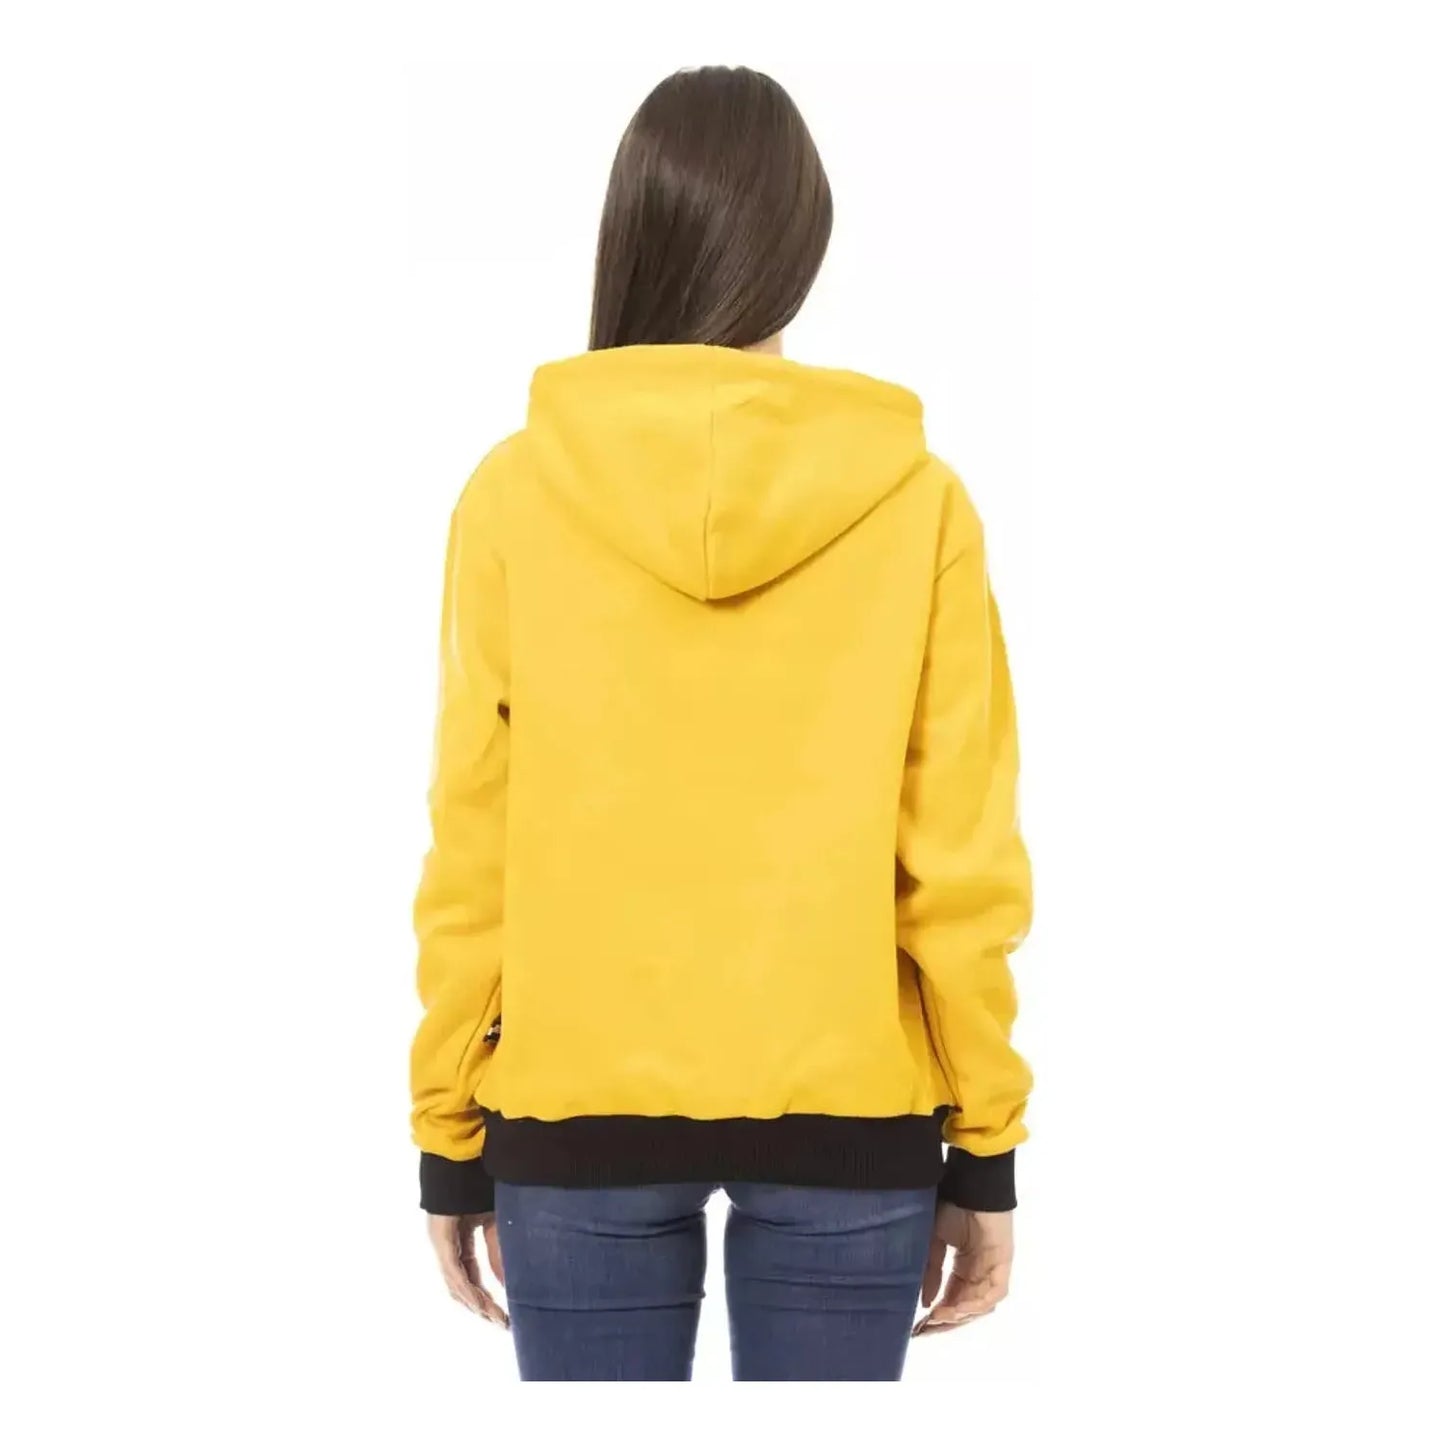 Baldinini Trend Chic Yellow Cotton Fleece Hoodie with Maxi Pocket yellow-cotton-sweater-1